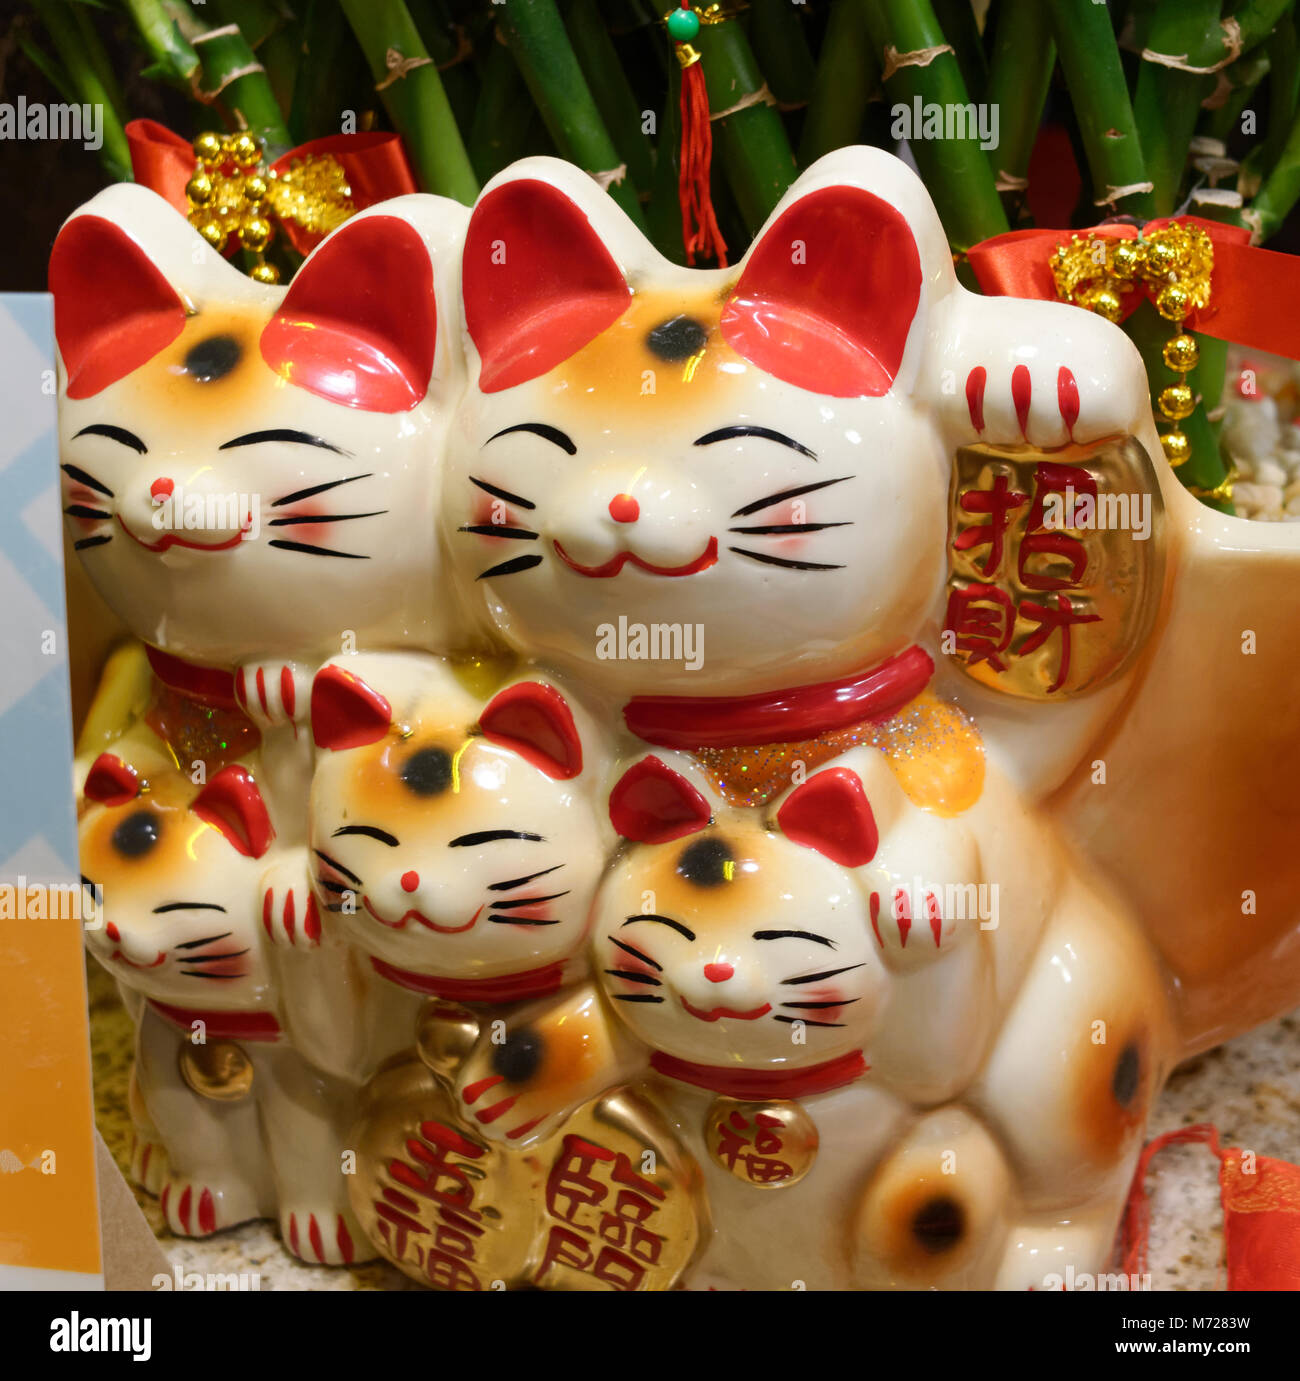 Maneki Neko lucky fortune cats on display at a restaurant Stock Photo